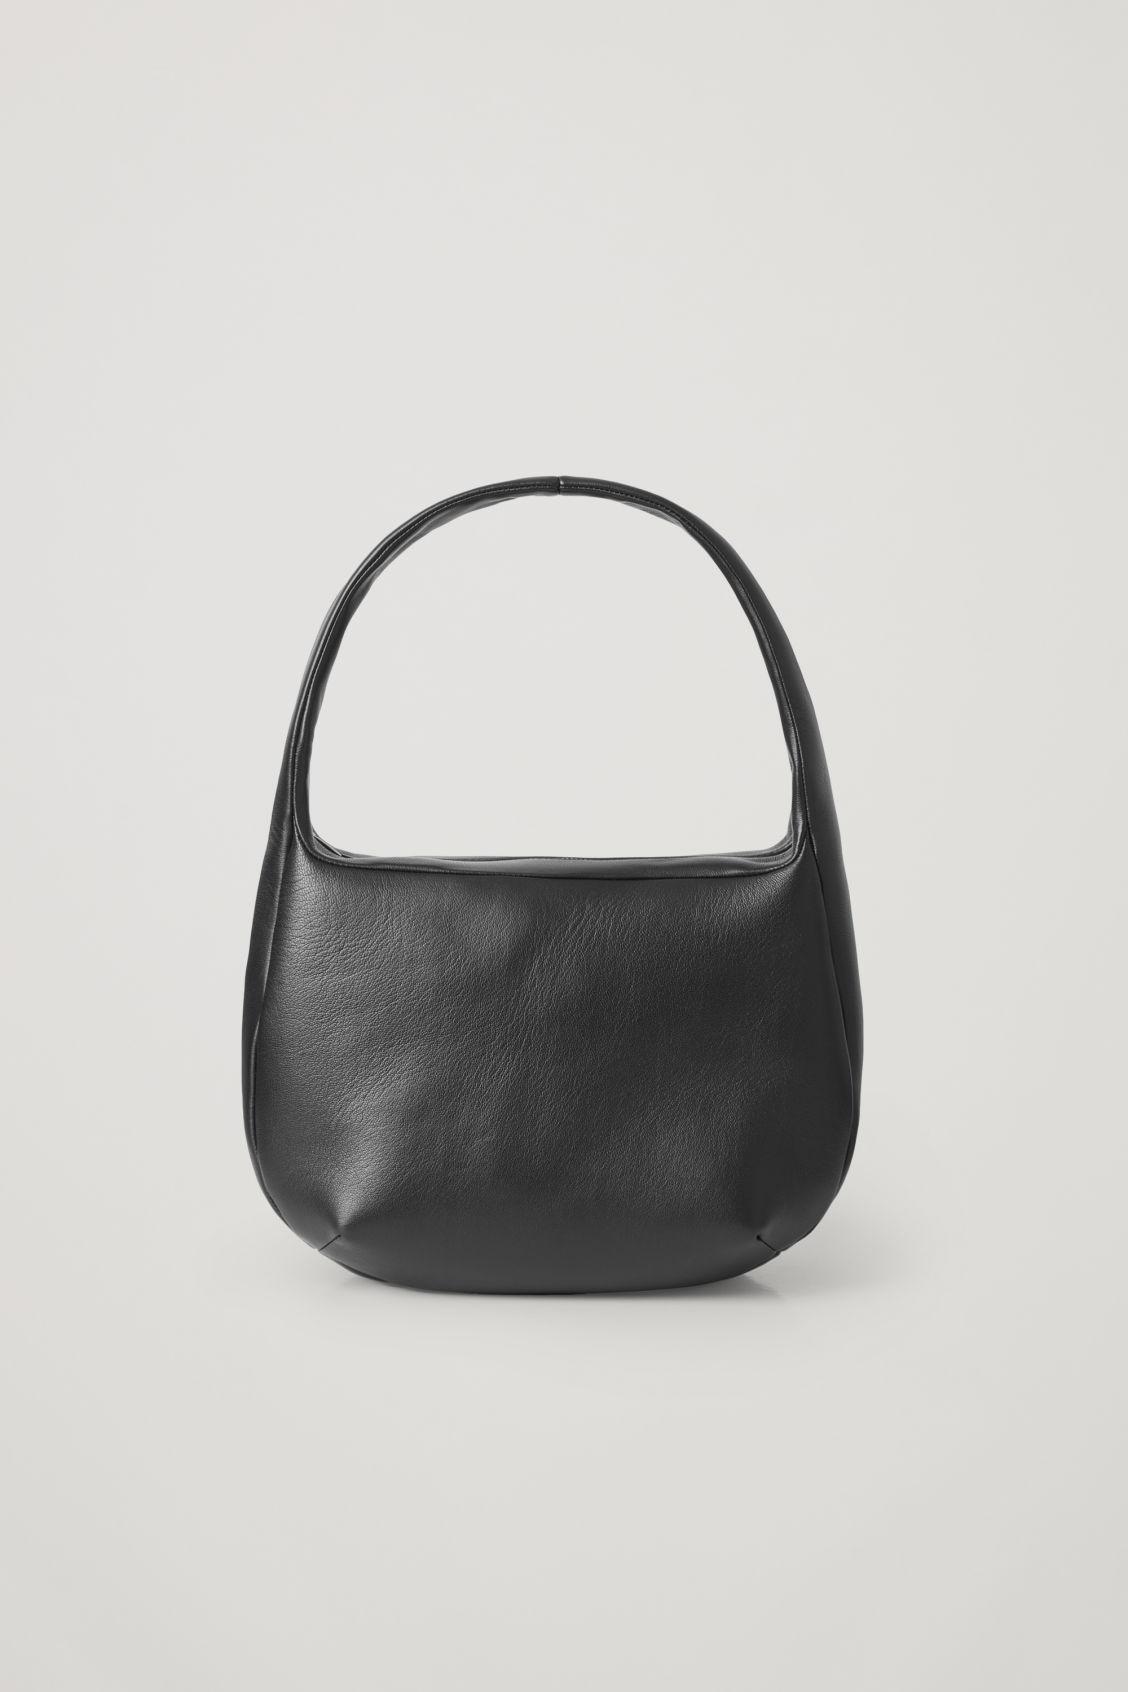 COS Leather Mini Shoulder Bag in Black - Lyst